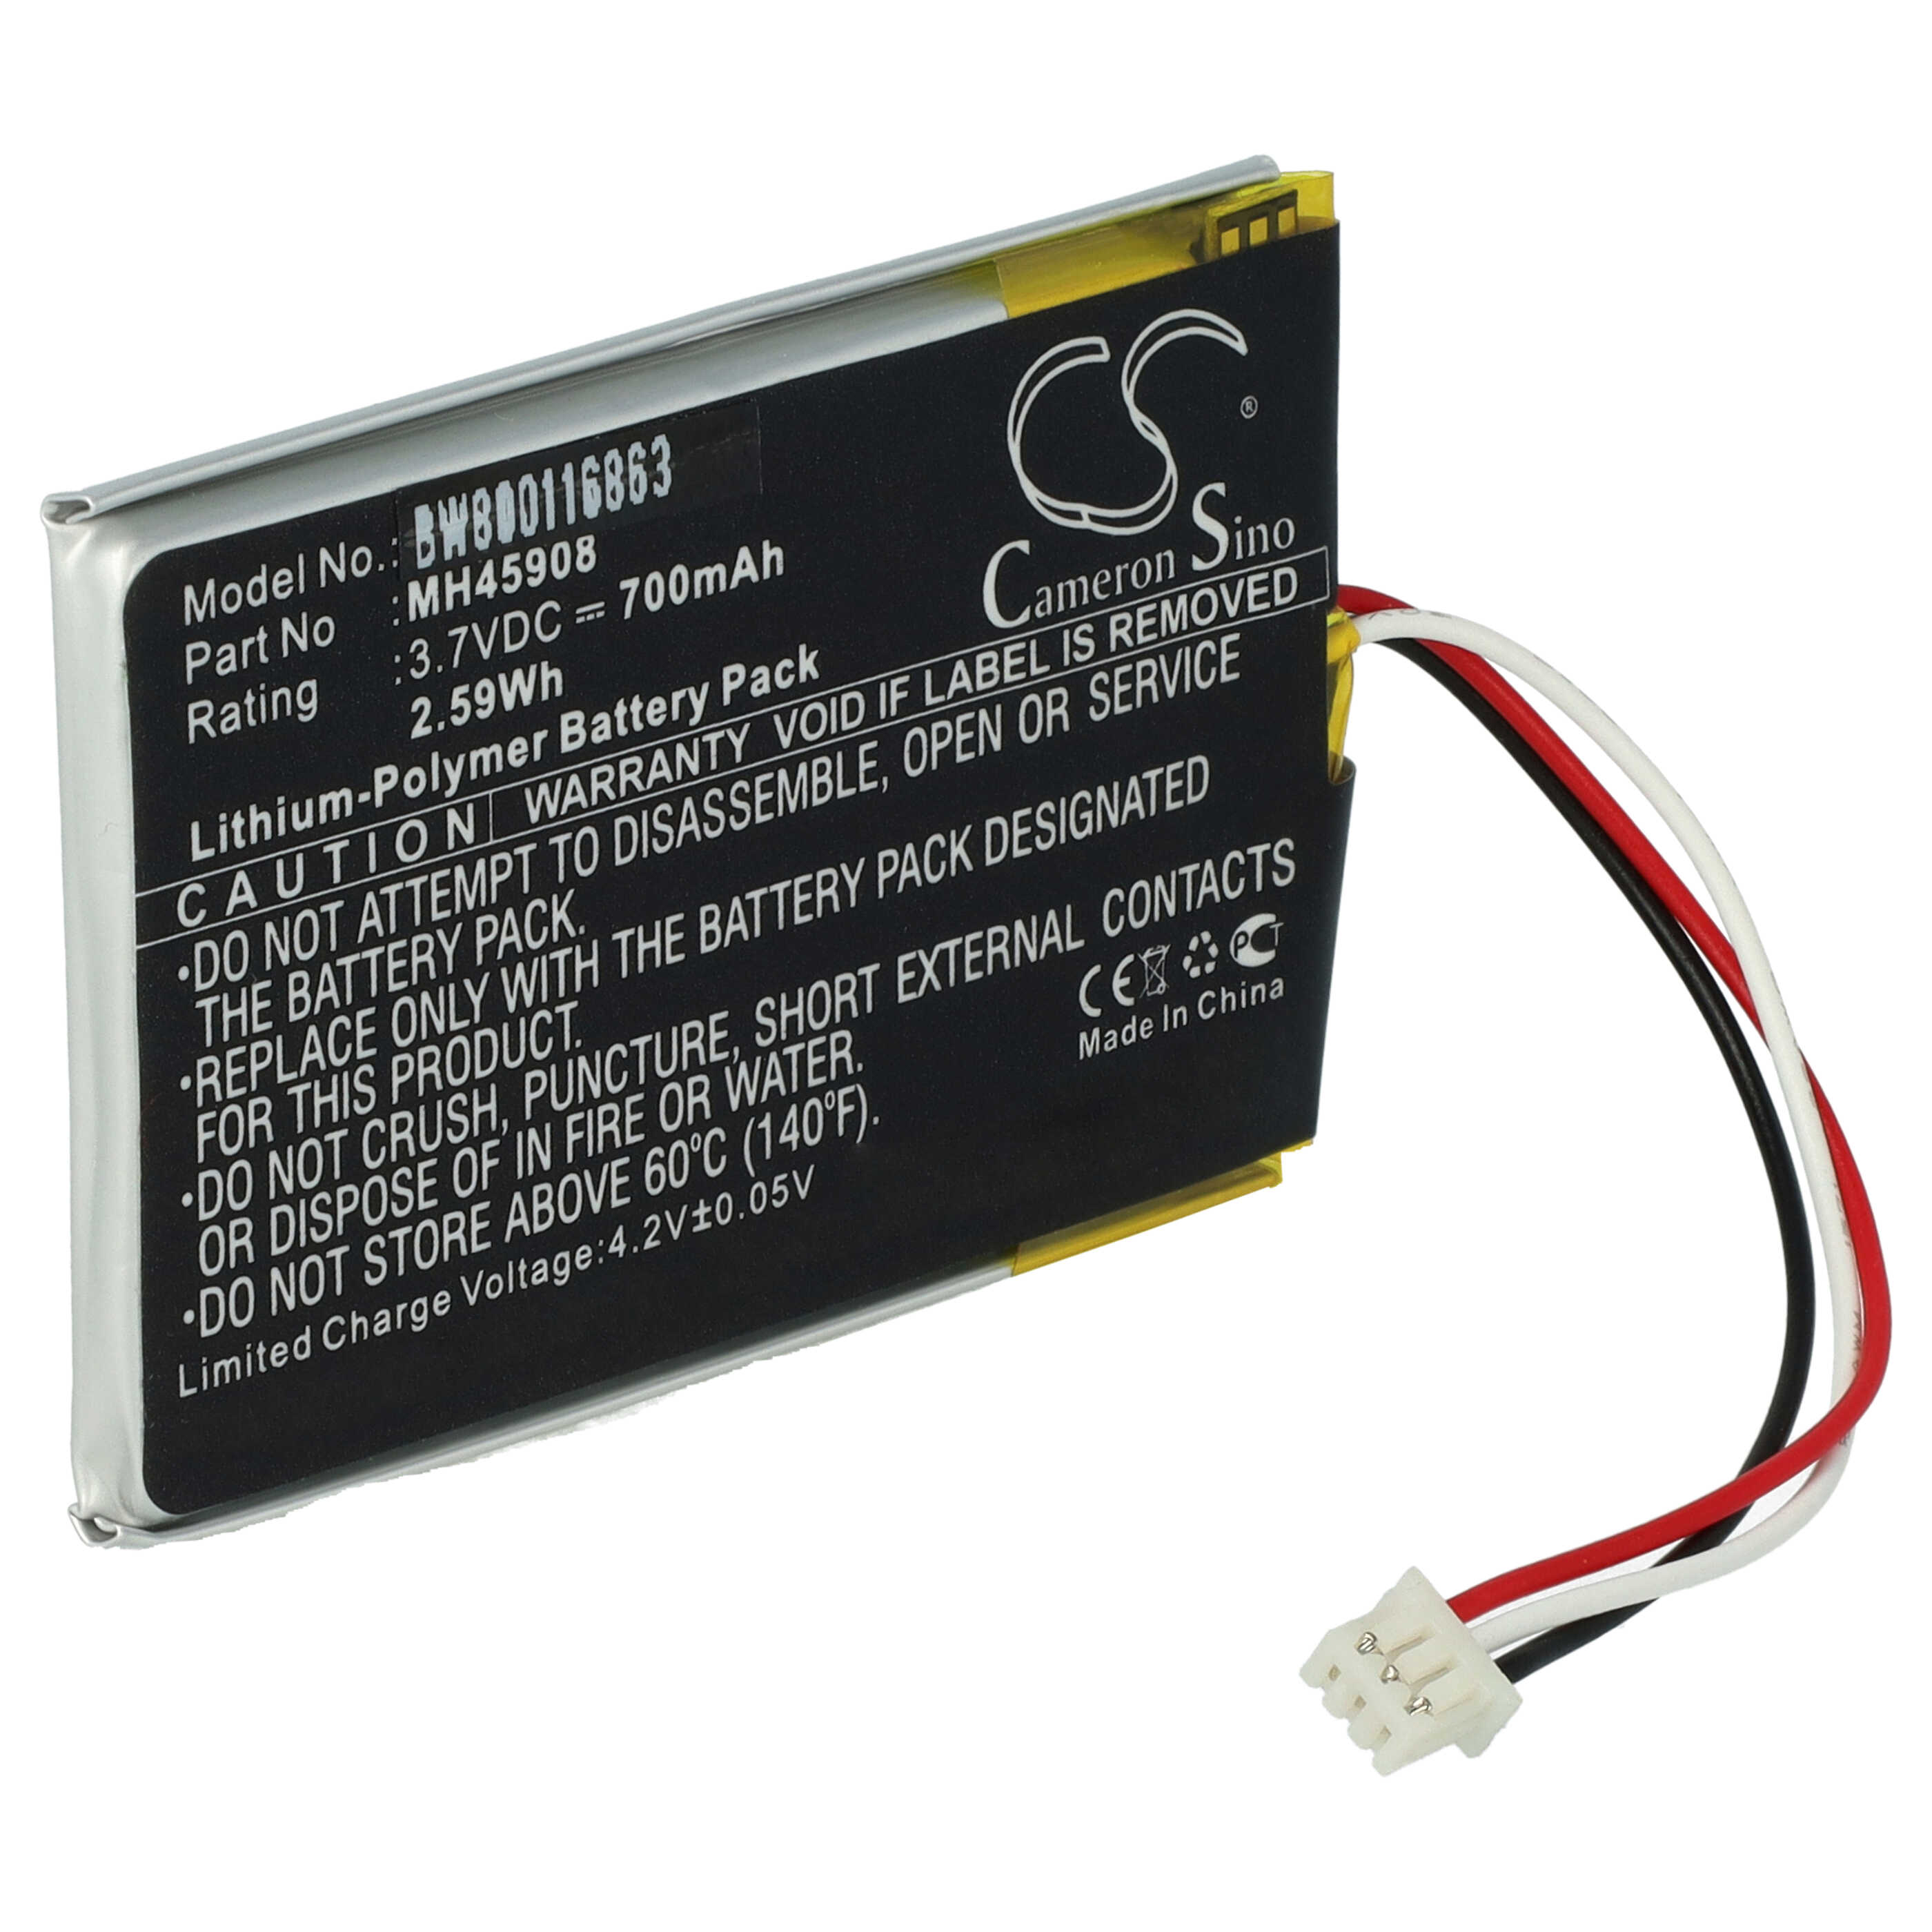 Akumulator do słuchawek bezprzewodowych zamiennik Corsair MH45908 - 700 mAh 3,7 V LiPo